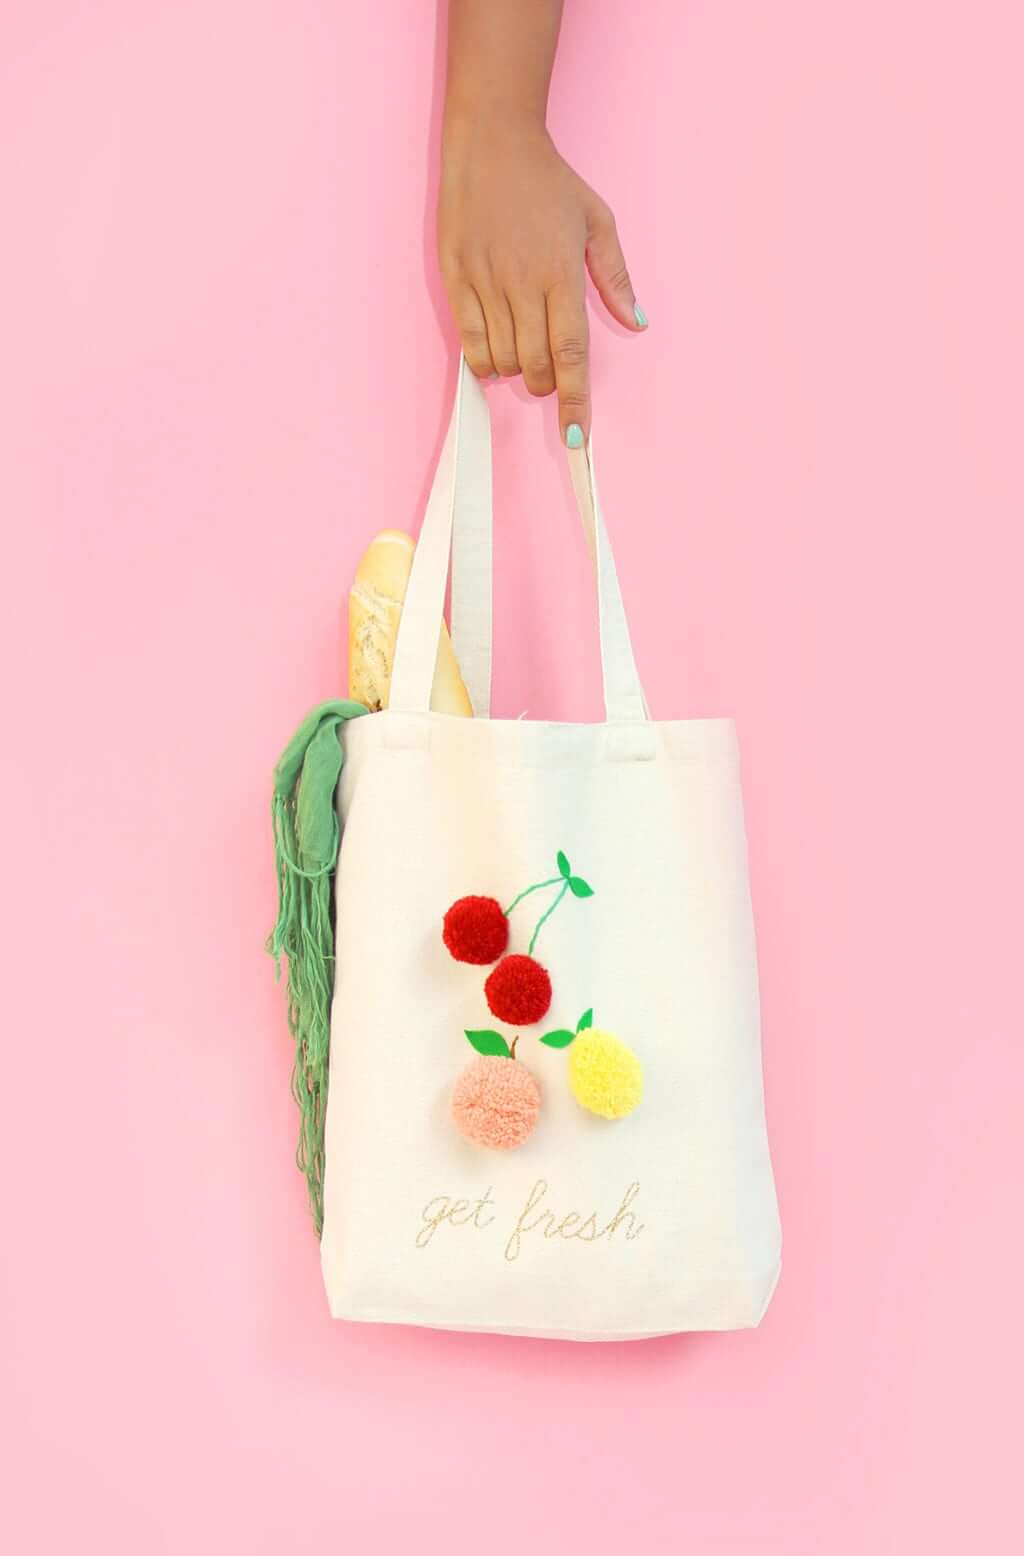 Adorable Pom-Pom Ball Cross Stitching Idea For Market Bag Cross Stitch Patterns Idea